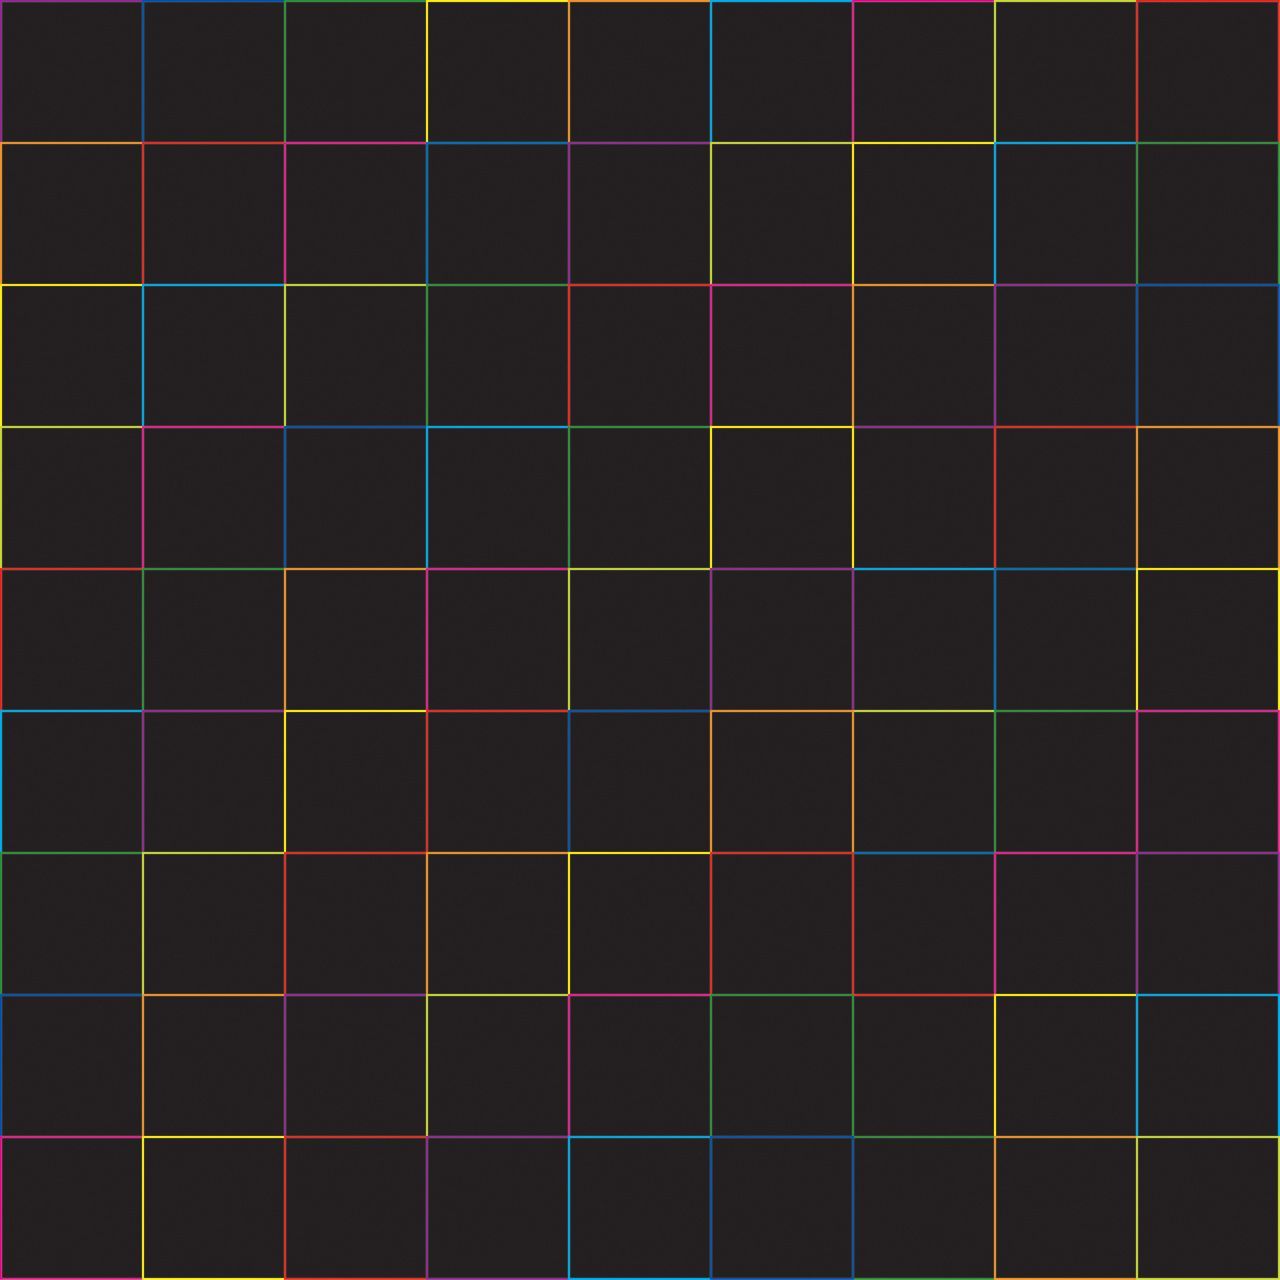 Ian MacLeod - Sudoku Art based on the 9x9 grid of Sudoku puzzles. Art base, Colorful wallpaper, Painting